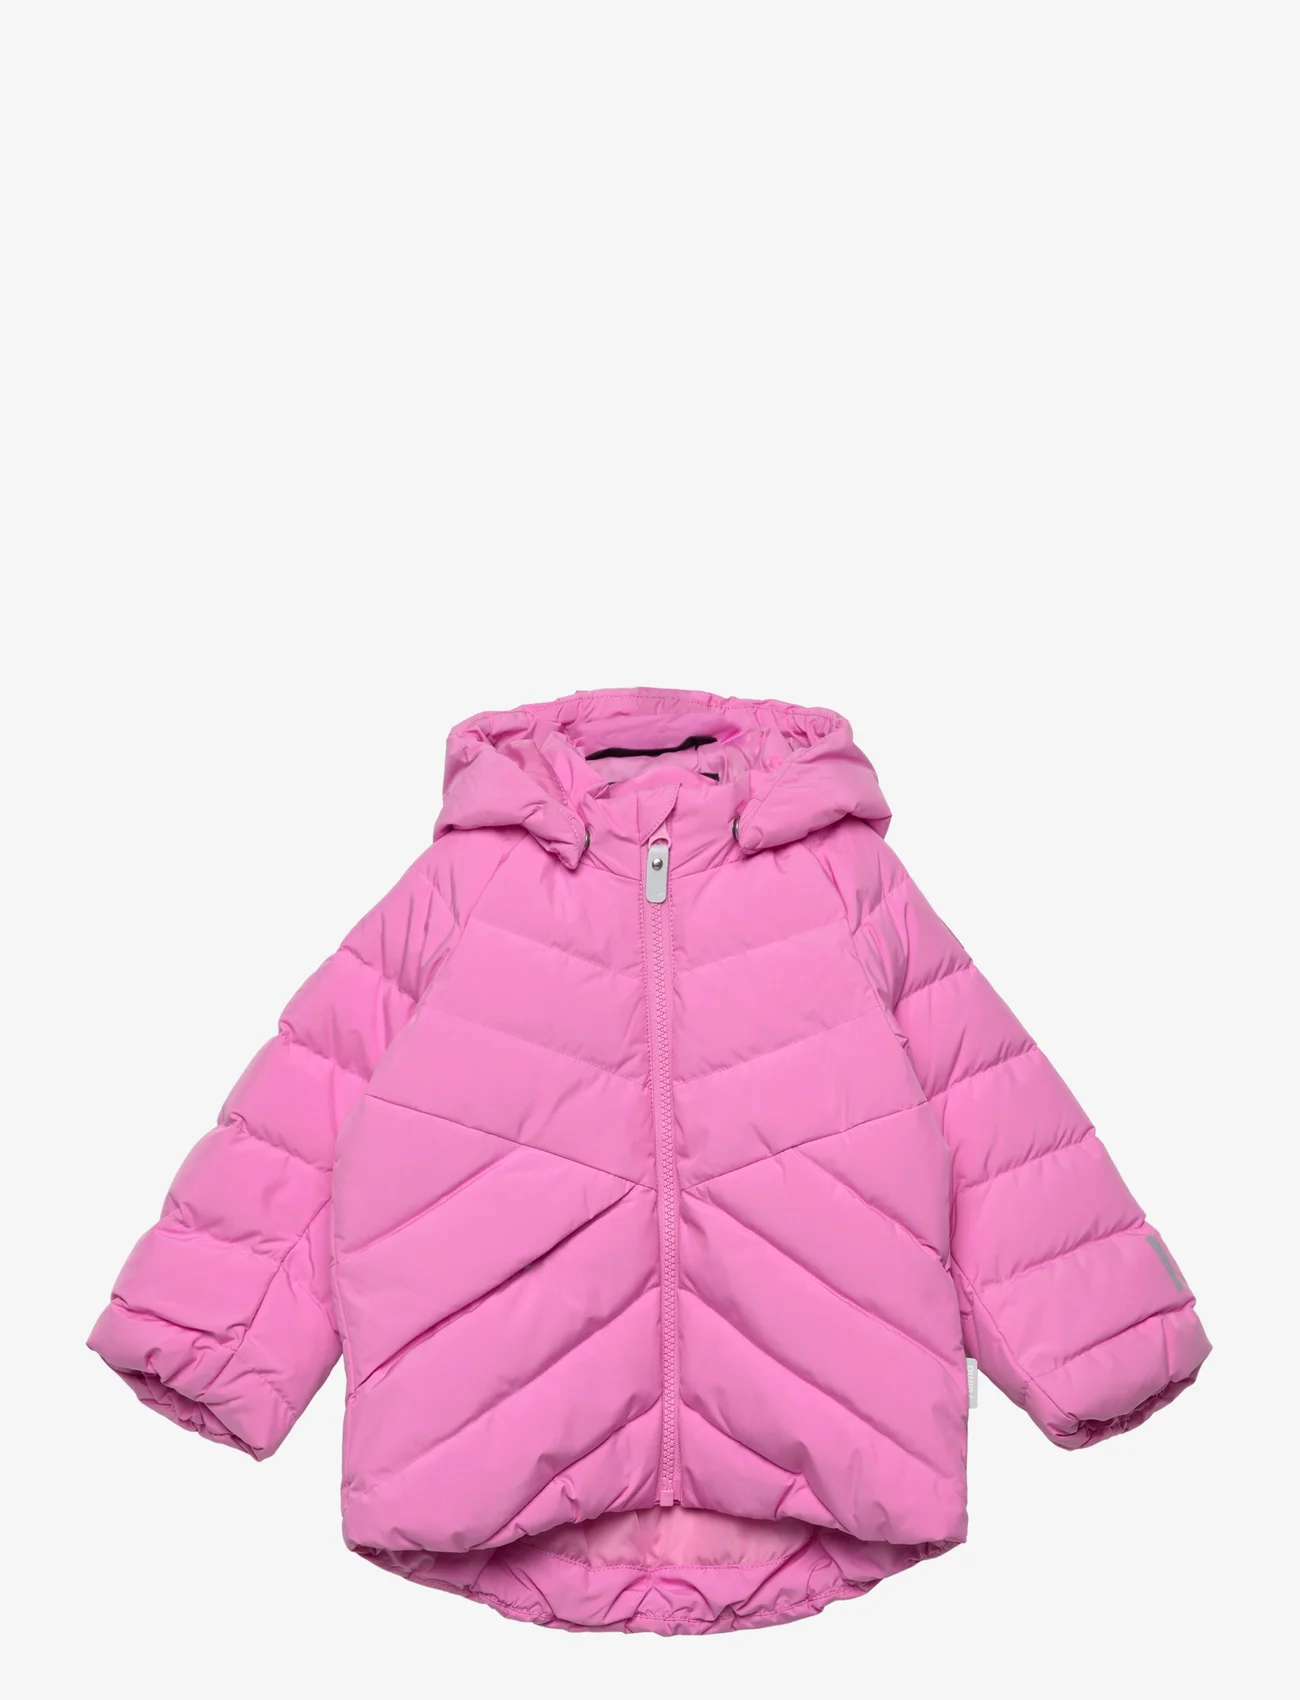 Reima - Down jacket, Kupponen - daunen-& steppjacken - cold pink - 0